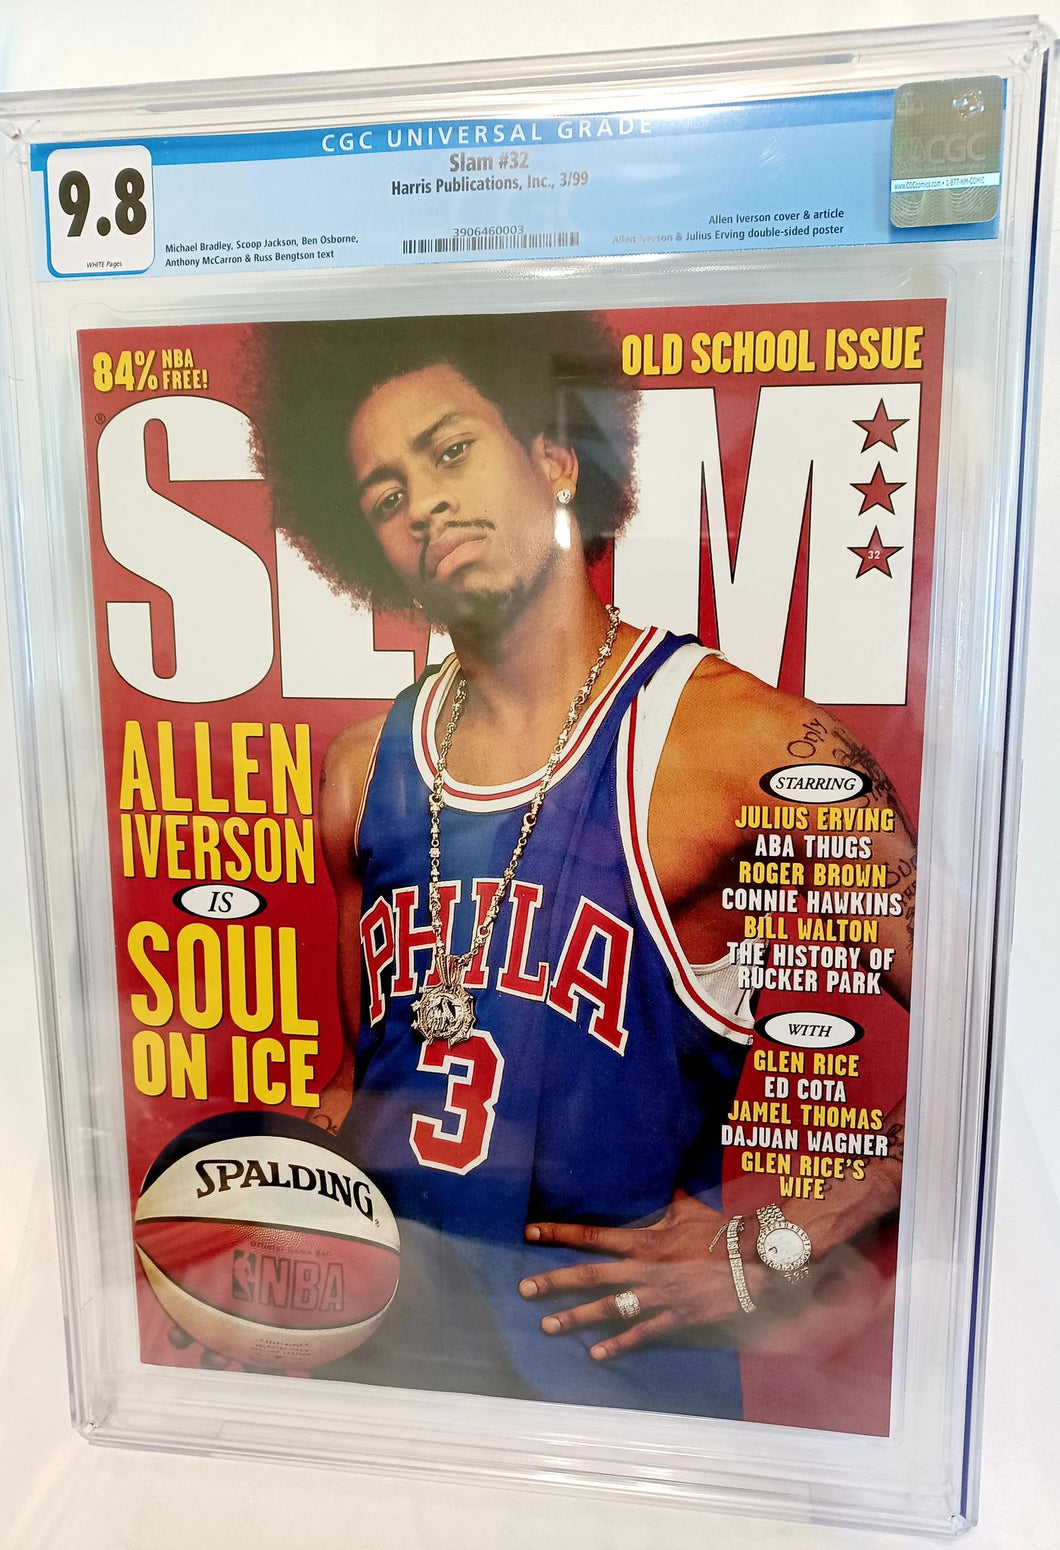 SLAM Magazine #32 CGC 9.8 - Allen Iverson Philadelphia 76ers cover, Highest on census